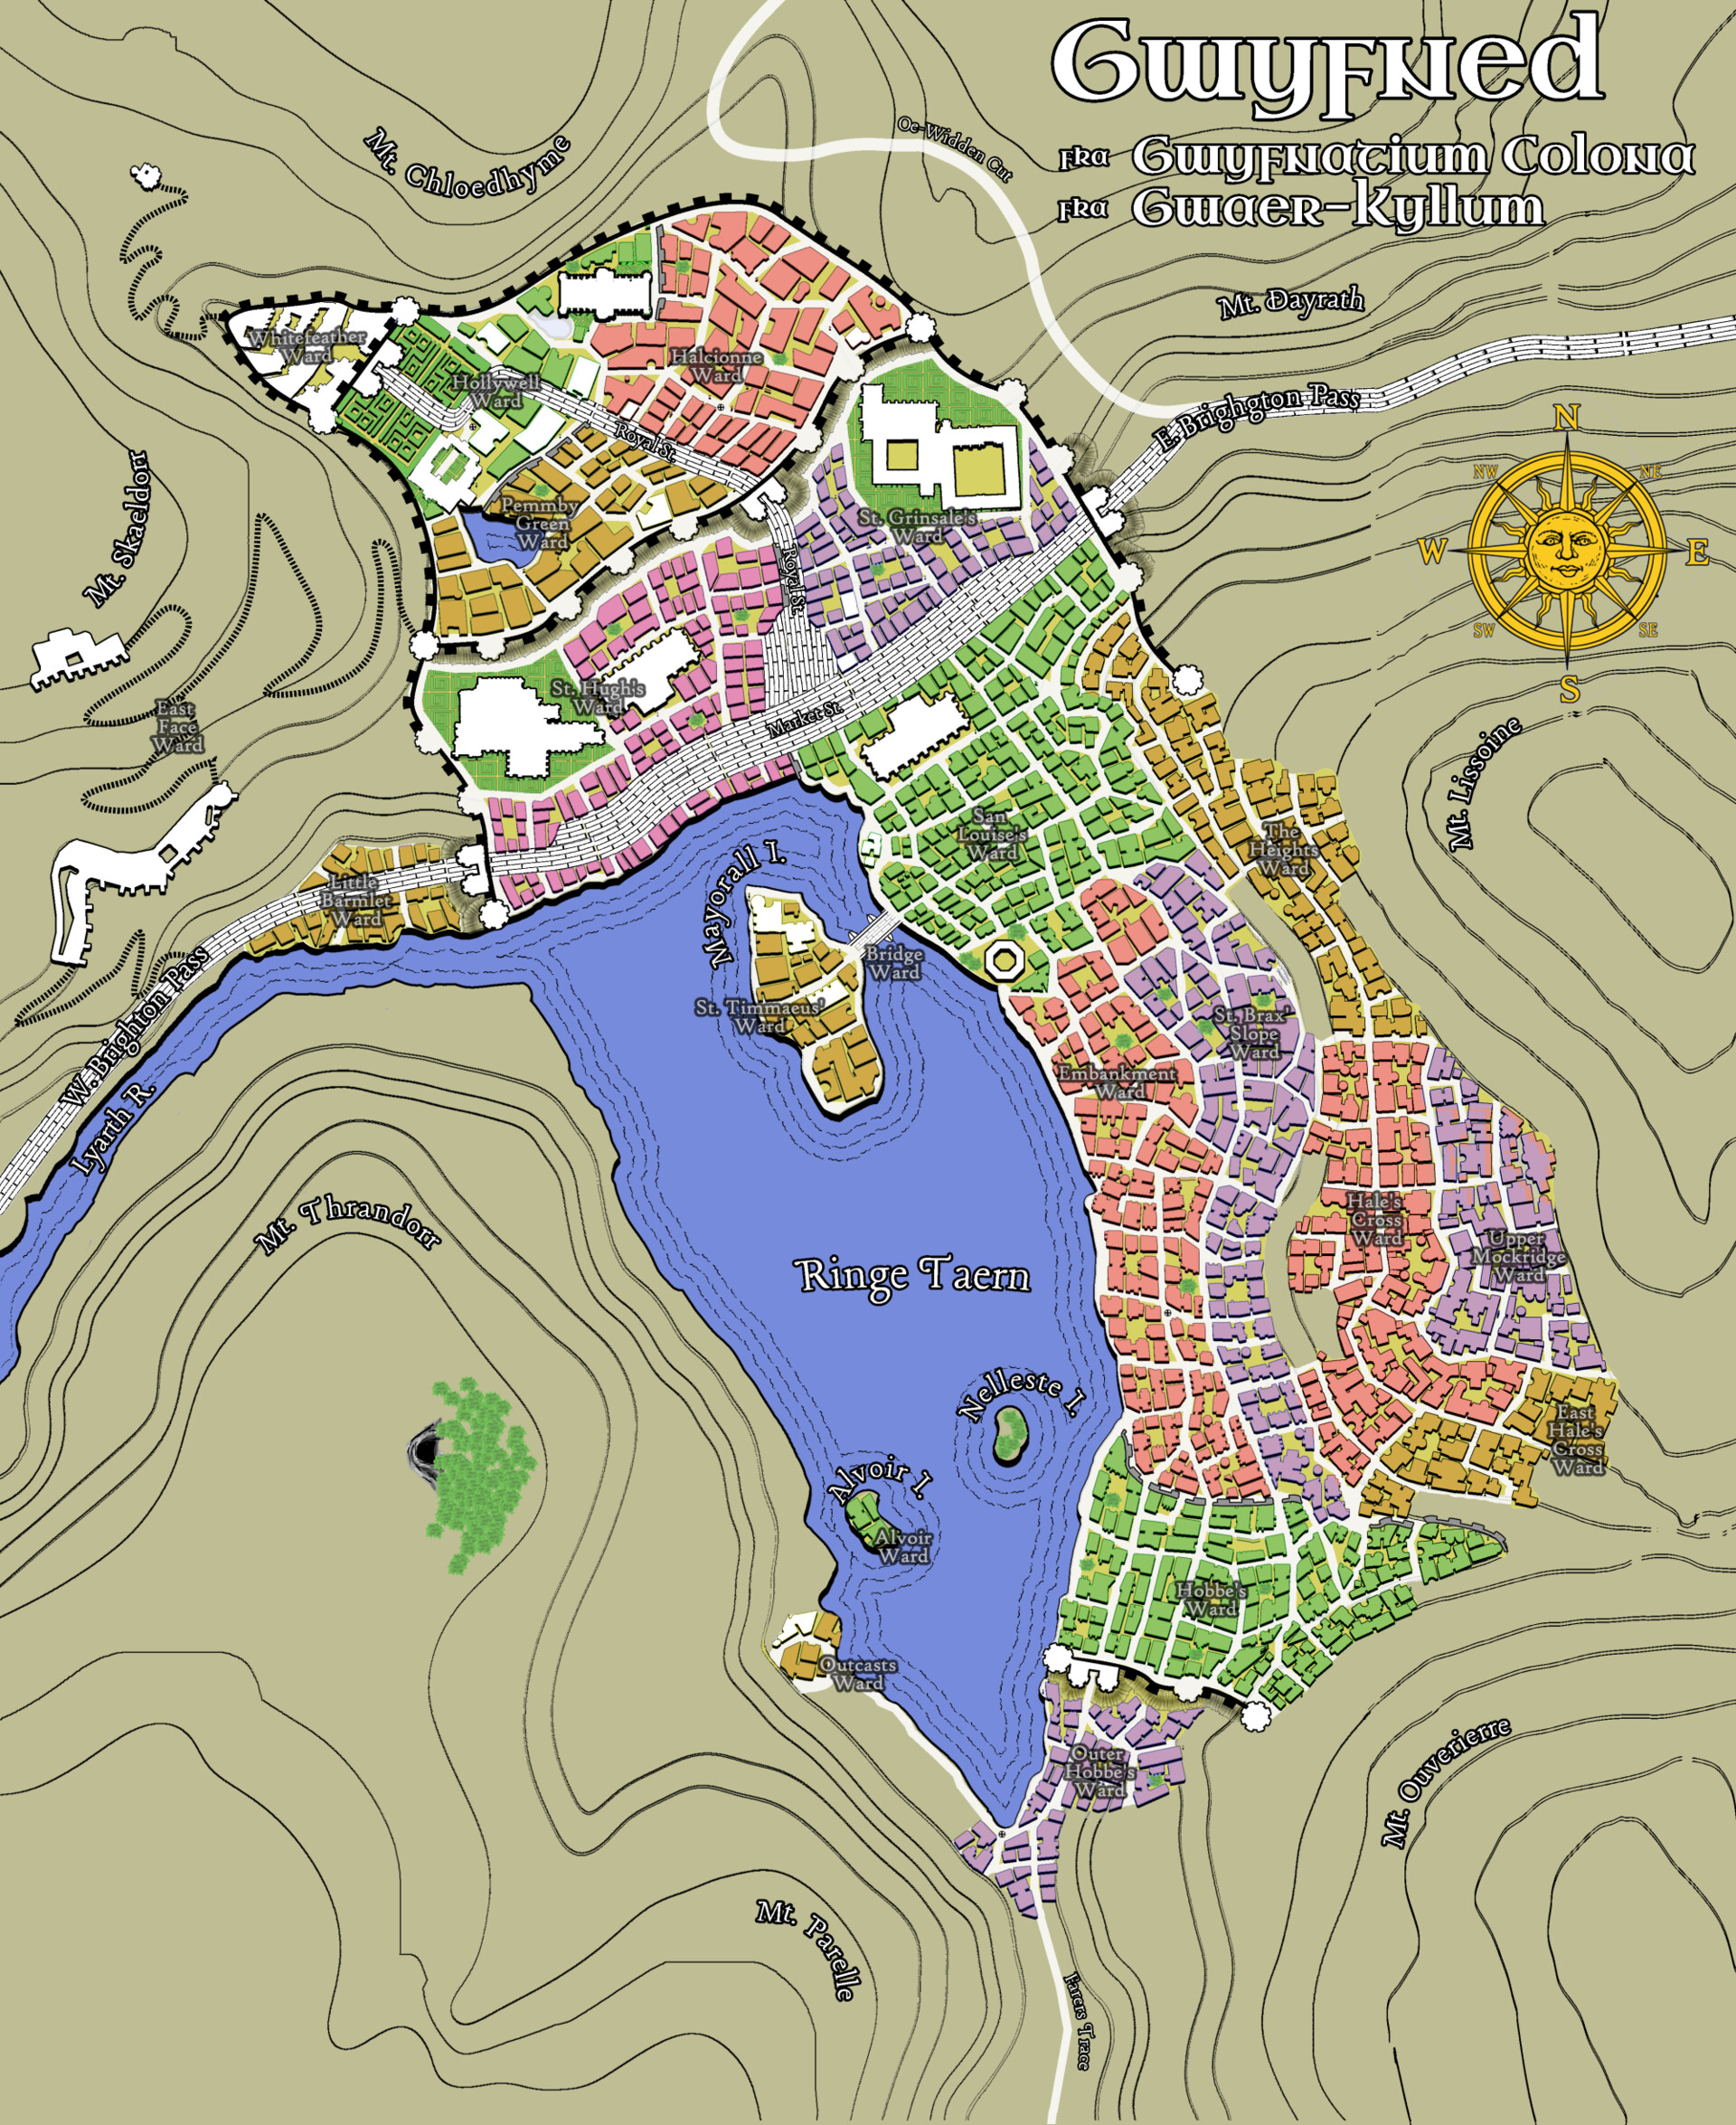 ArtStation - Gwyfned City Map